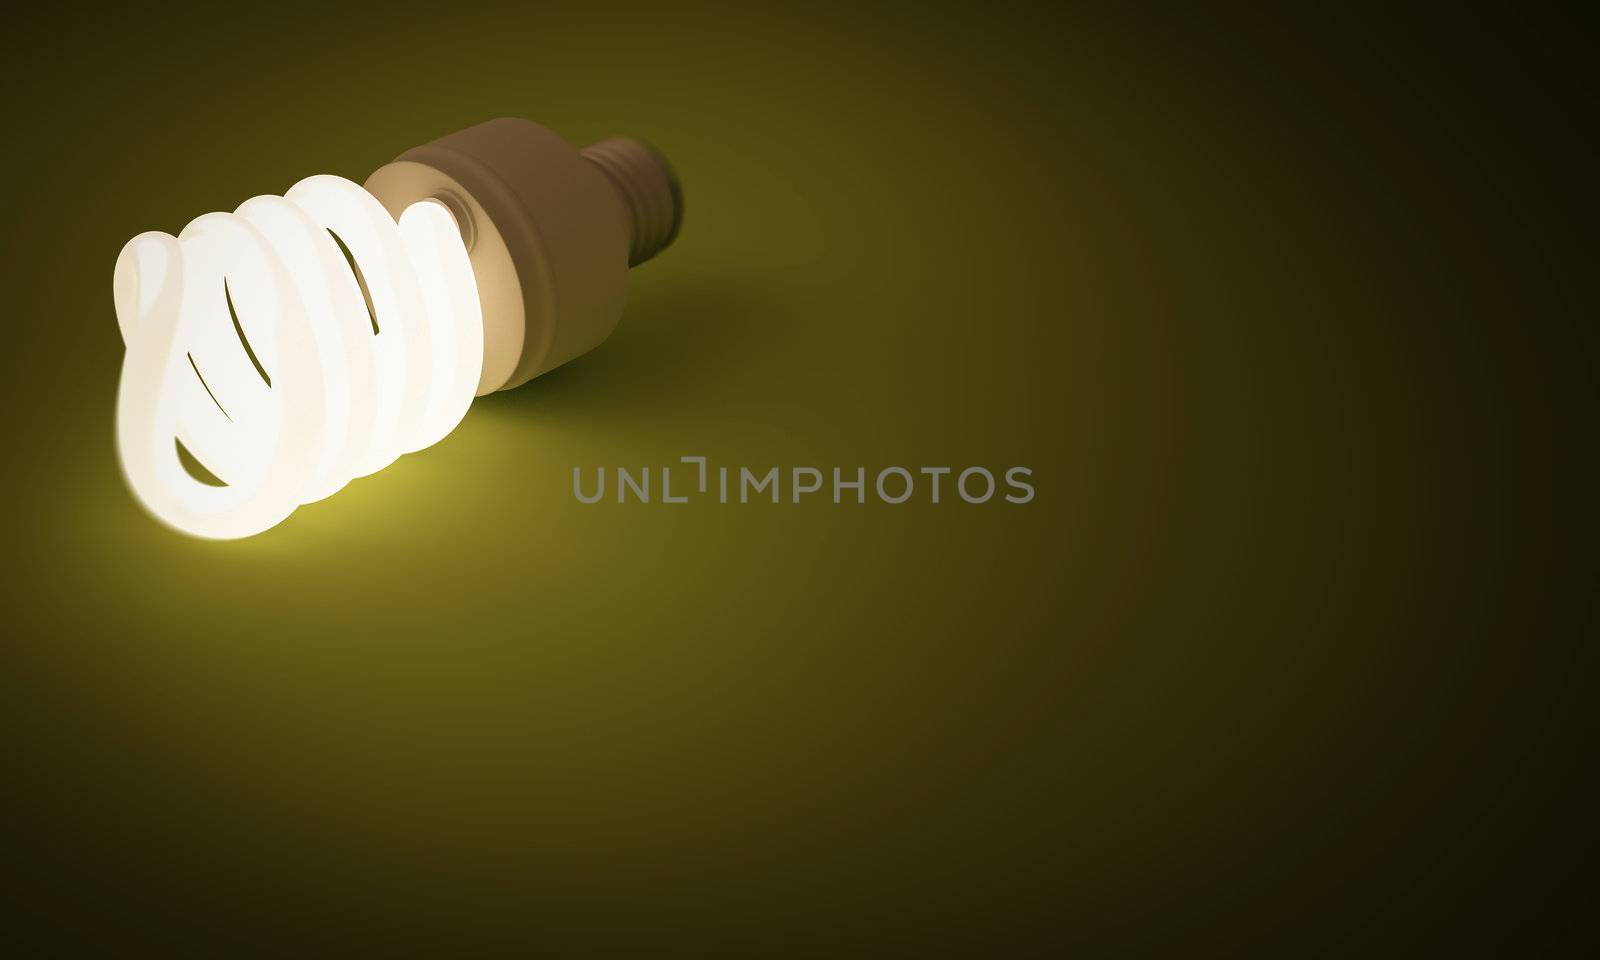 A lit spiral energy saving lightbulb on a green background.